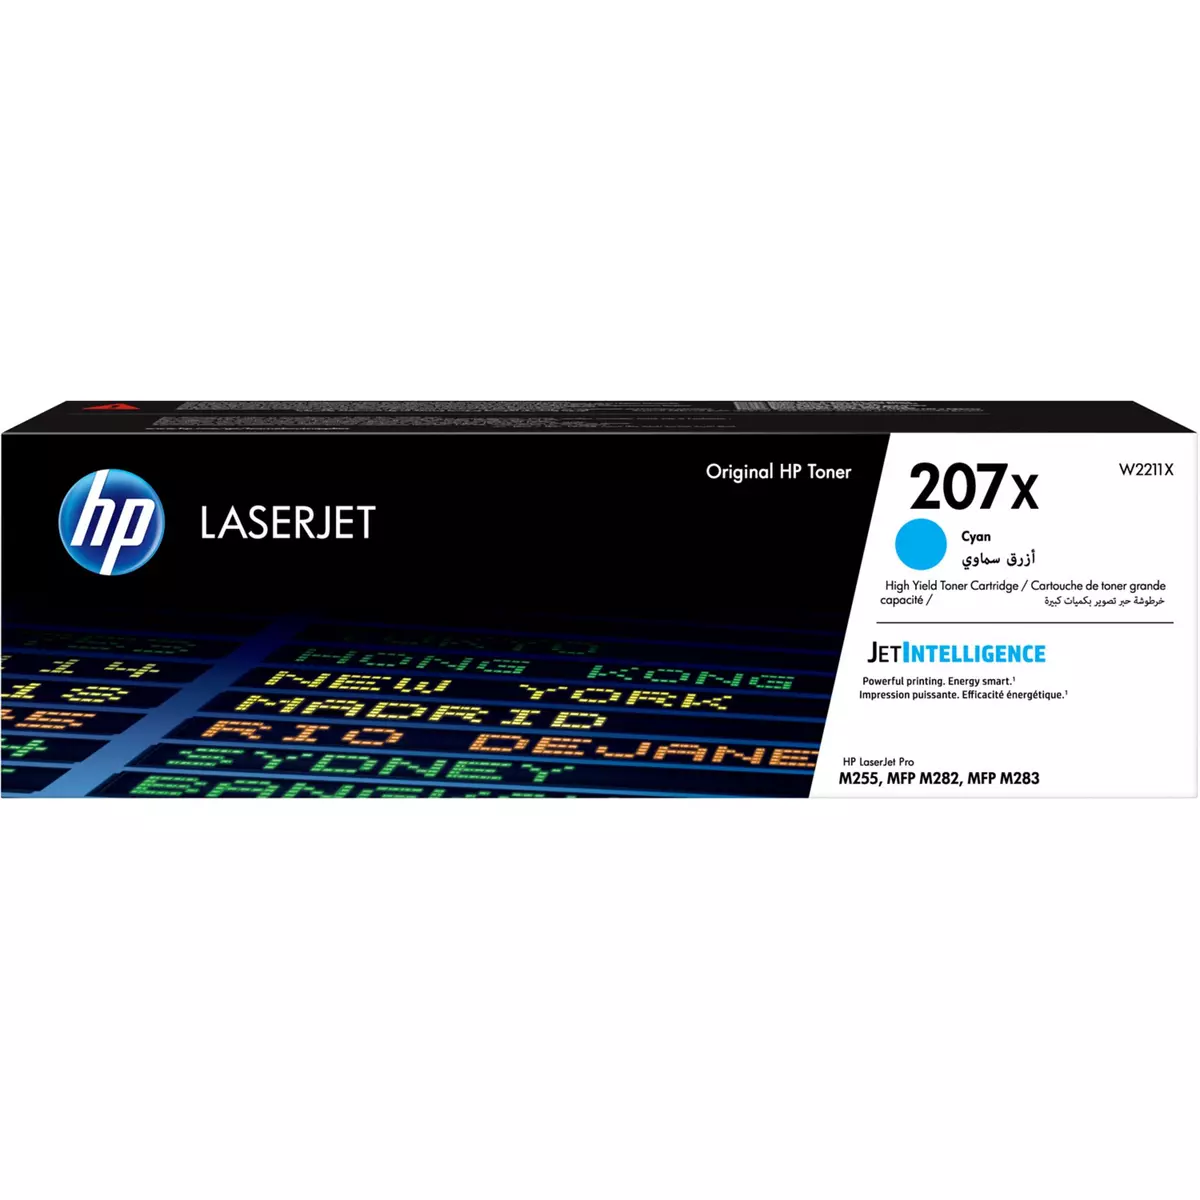 HP Cartouche imprimante TONER LASER N207X - Cyan